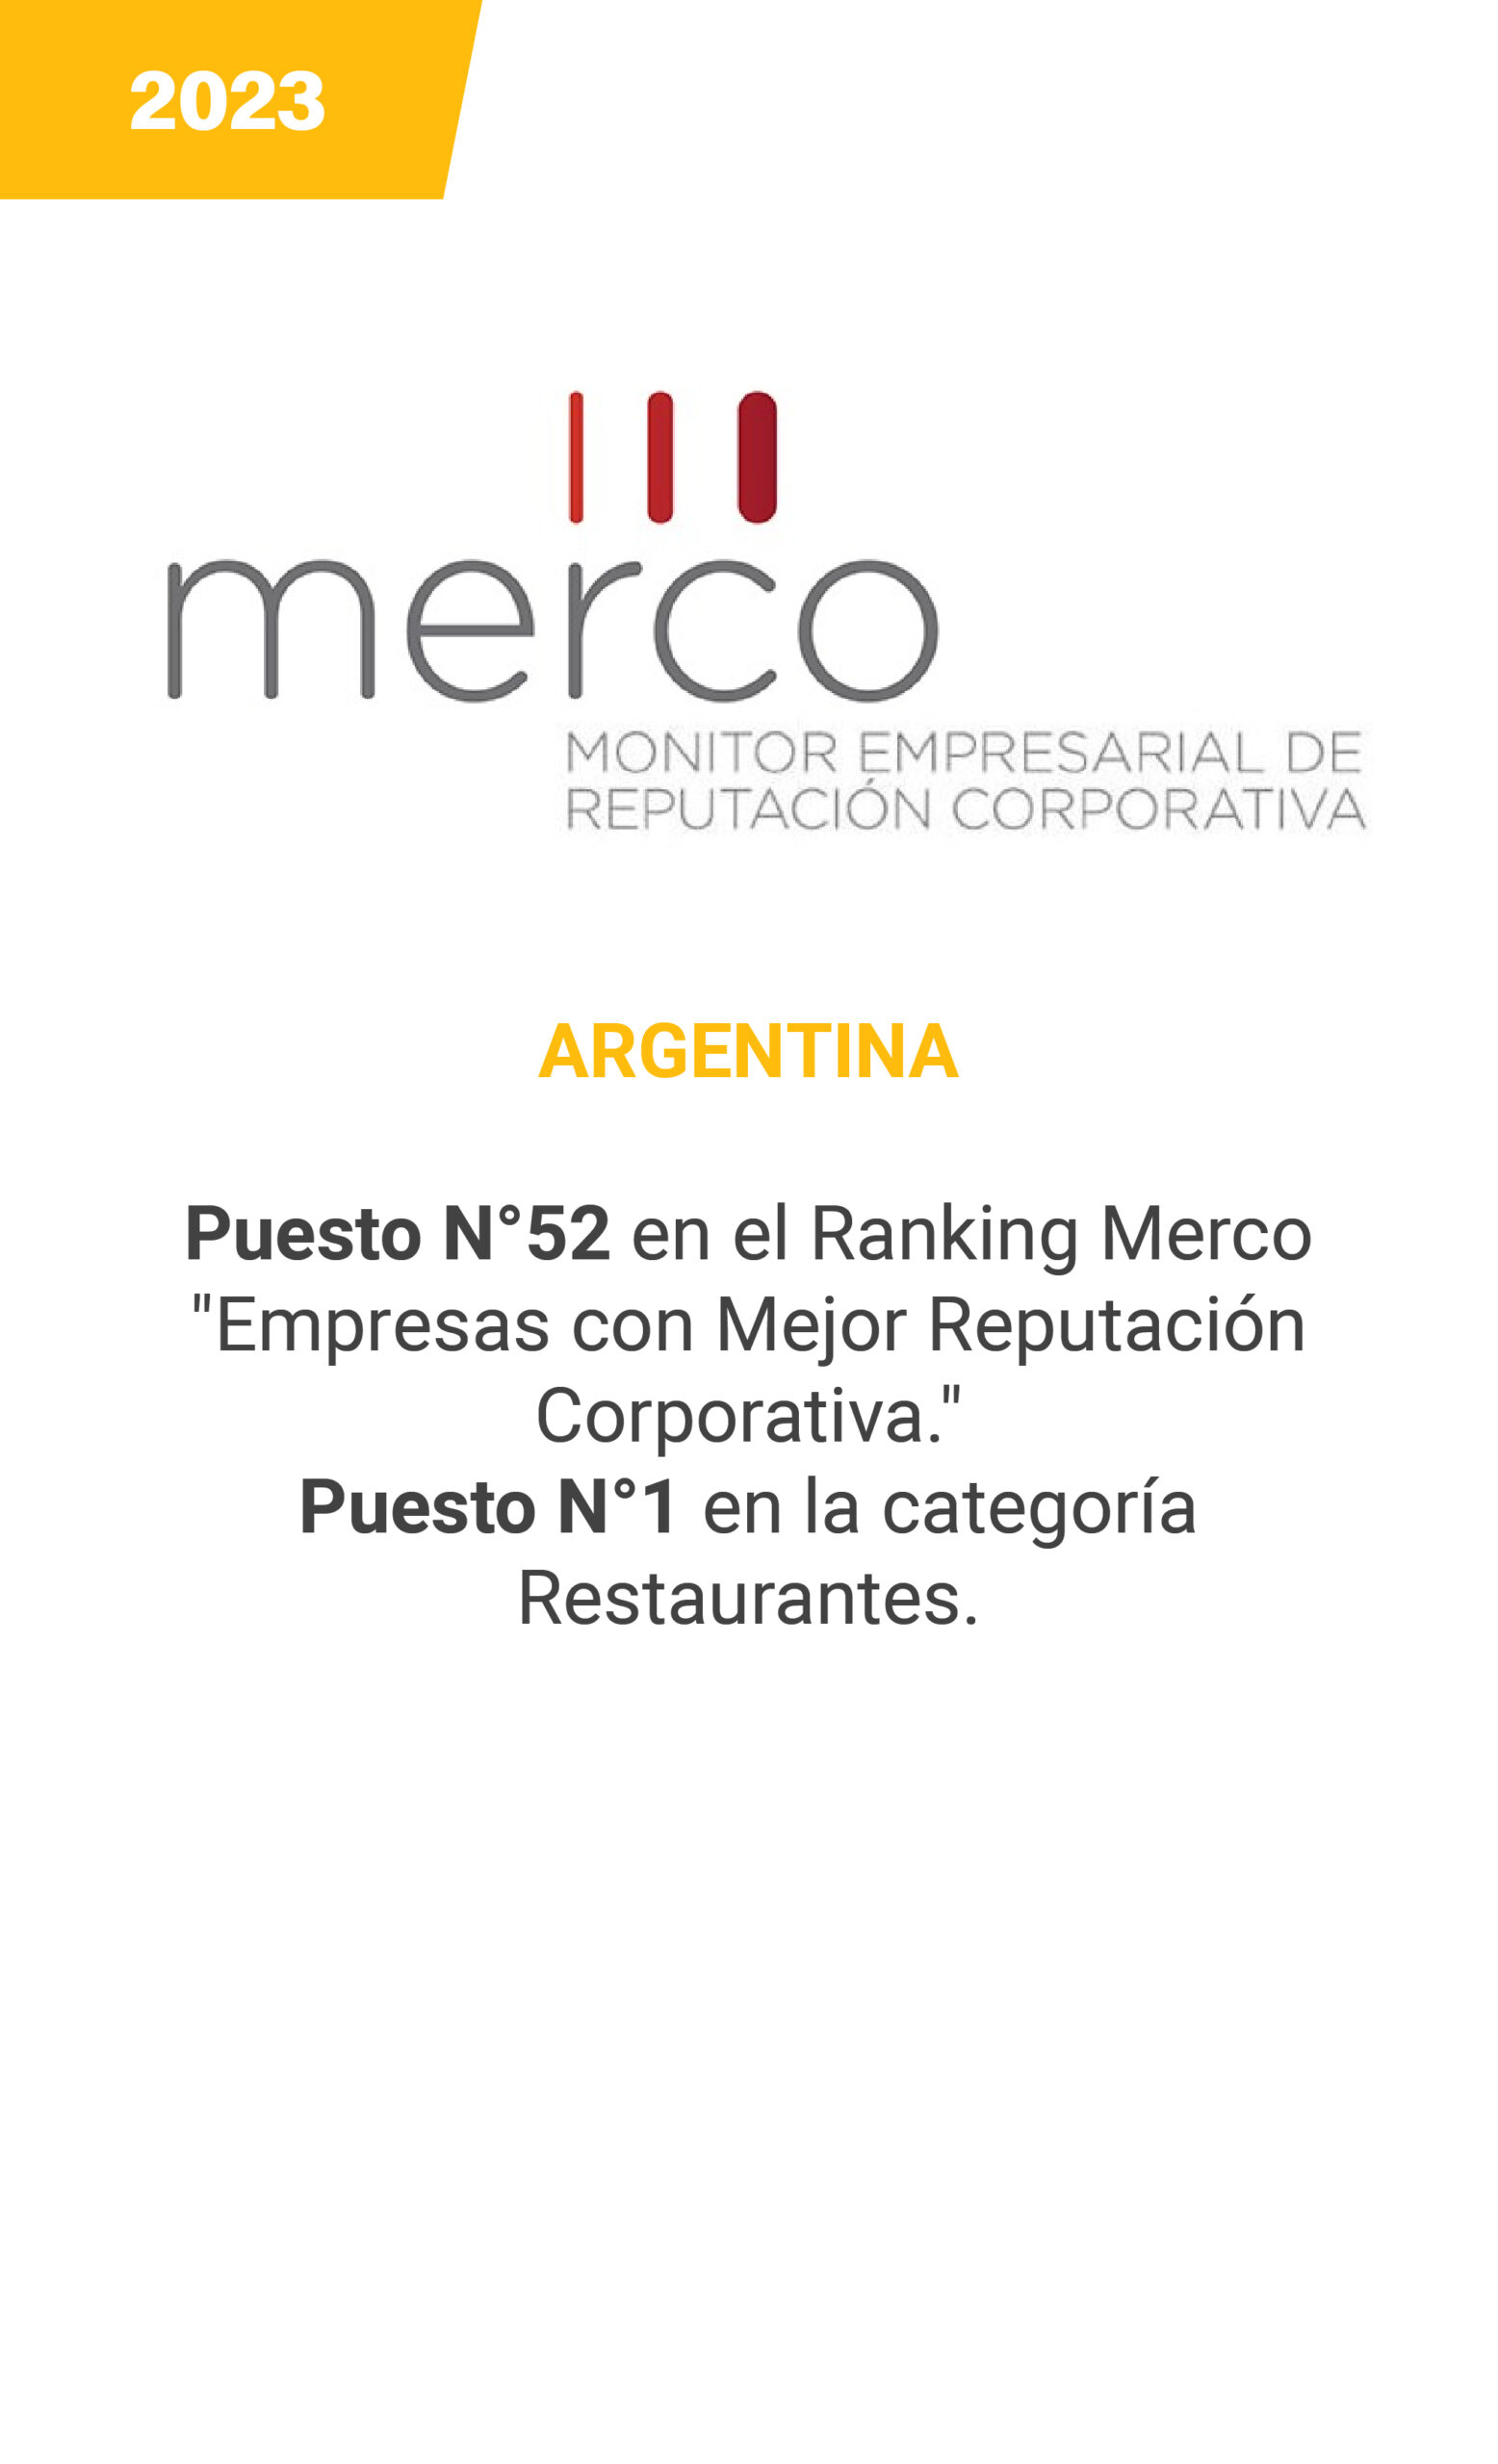 MERCO - Argentina 2023 - mobile